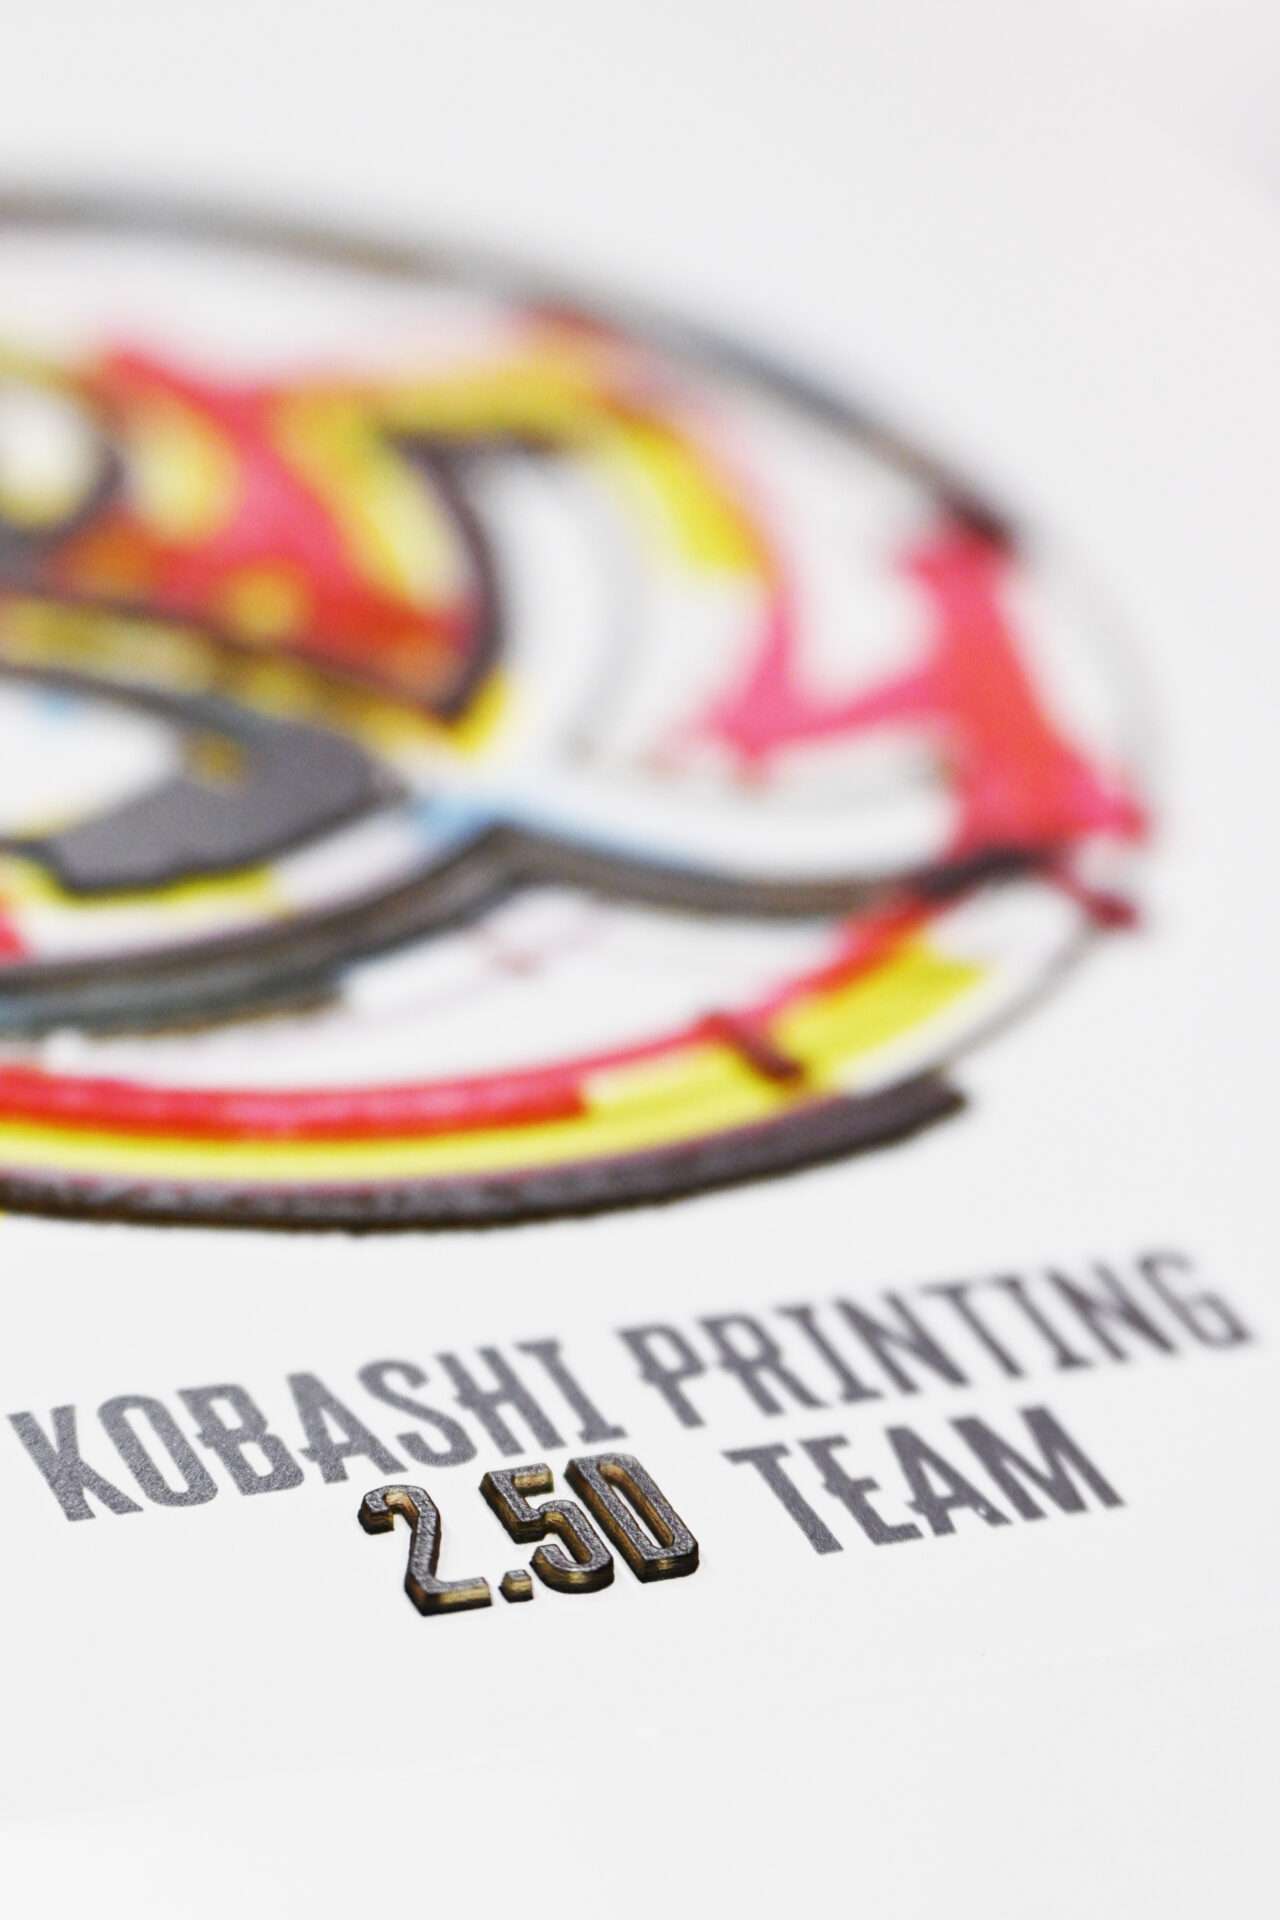 KOBASHI PRINTING 2.5D TEAM